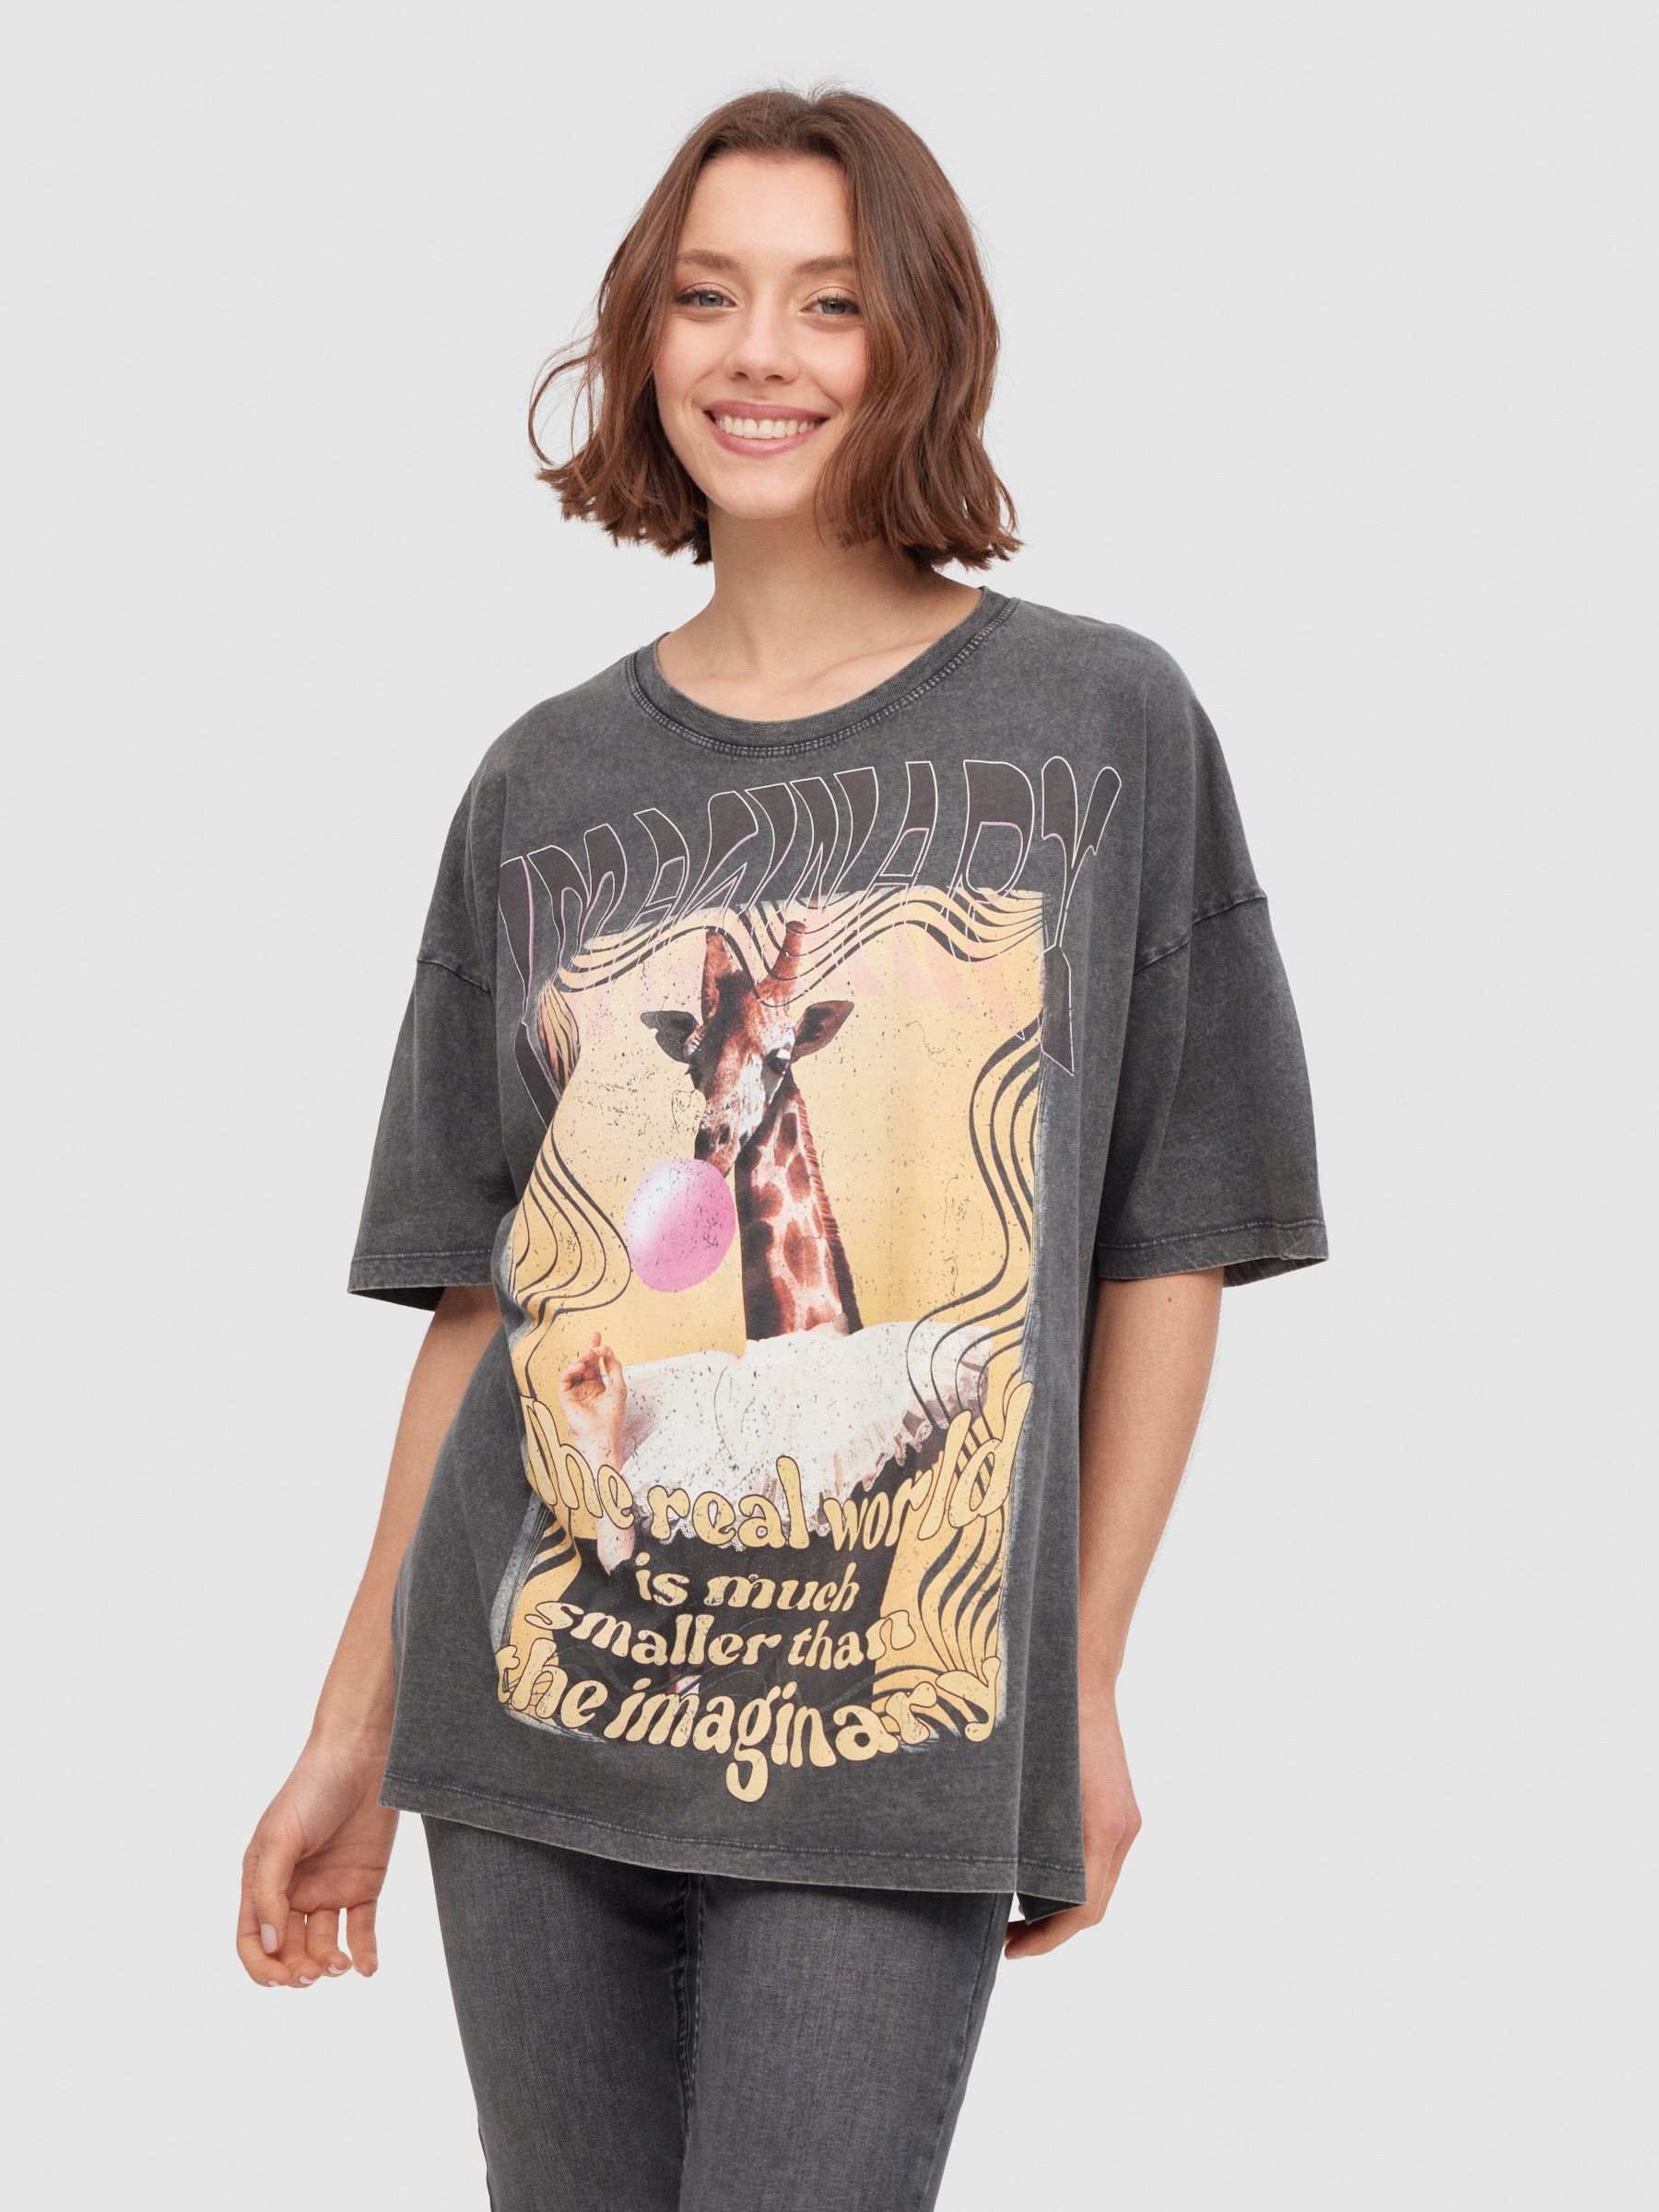 https://inside-shops.com/361604/oversize-giraffe-t-shirt.jpg